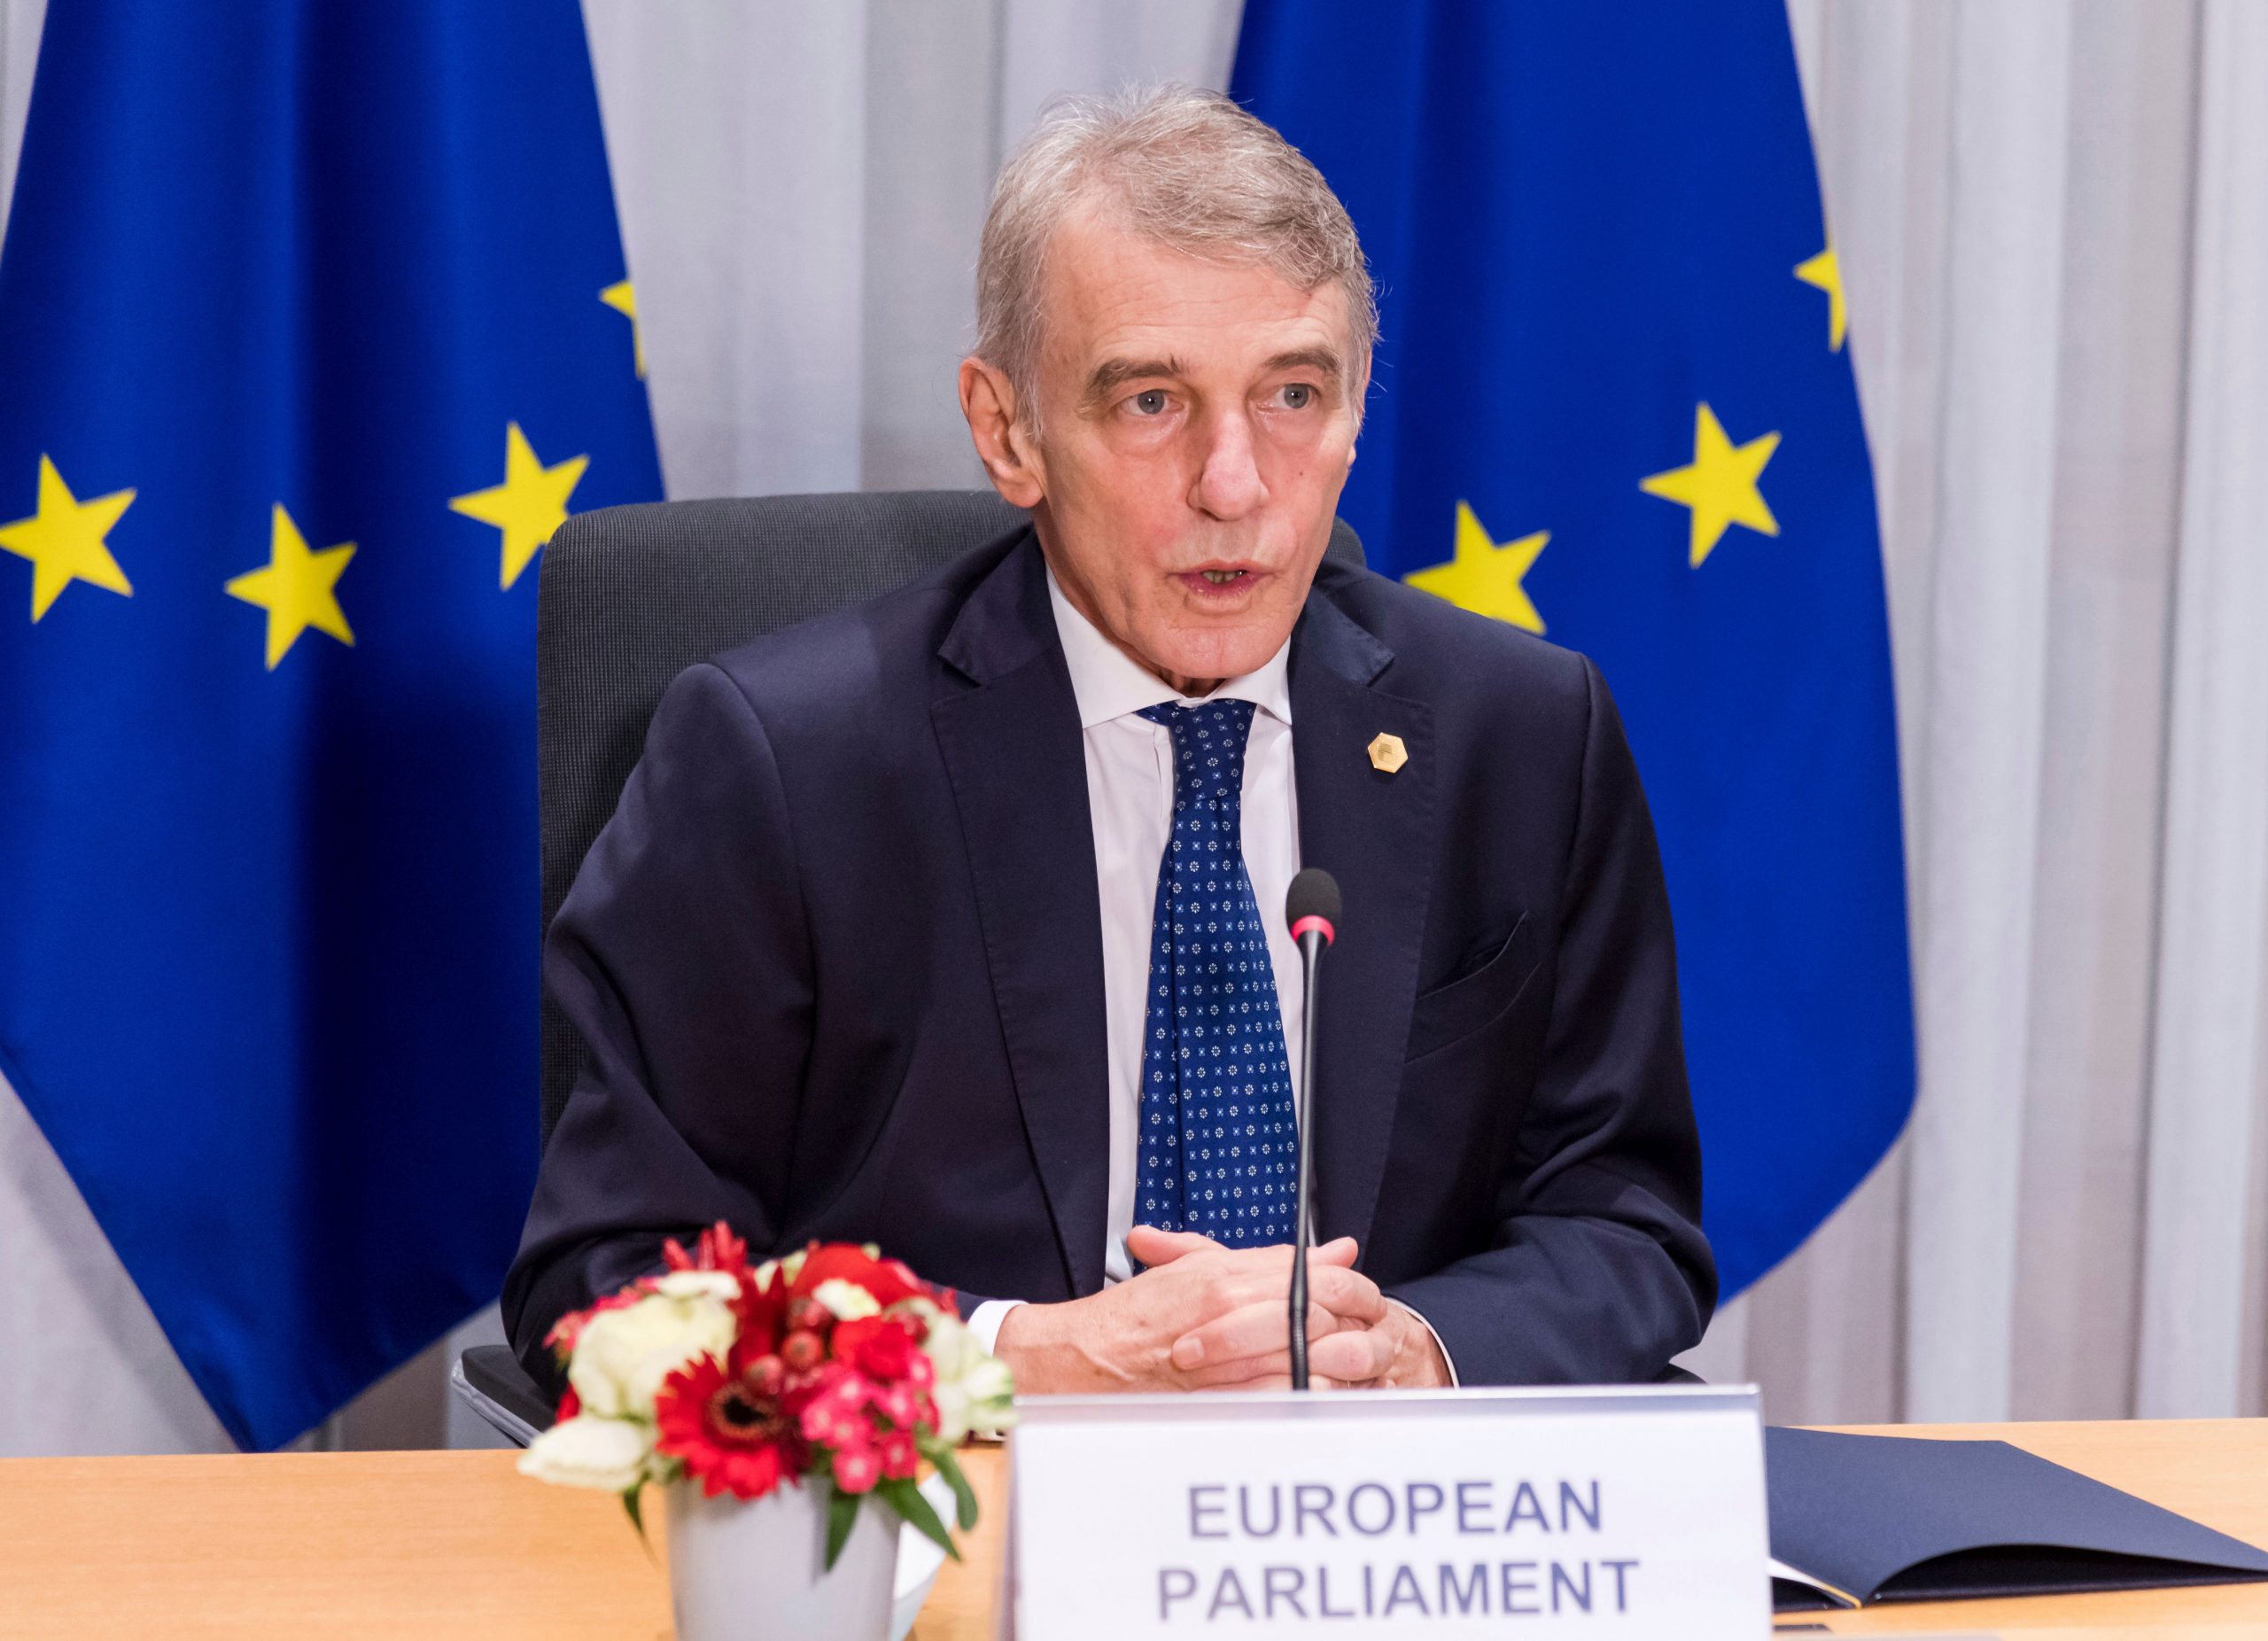 David Sassoli, European Parliament President, dies at age 65